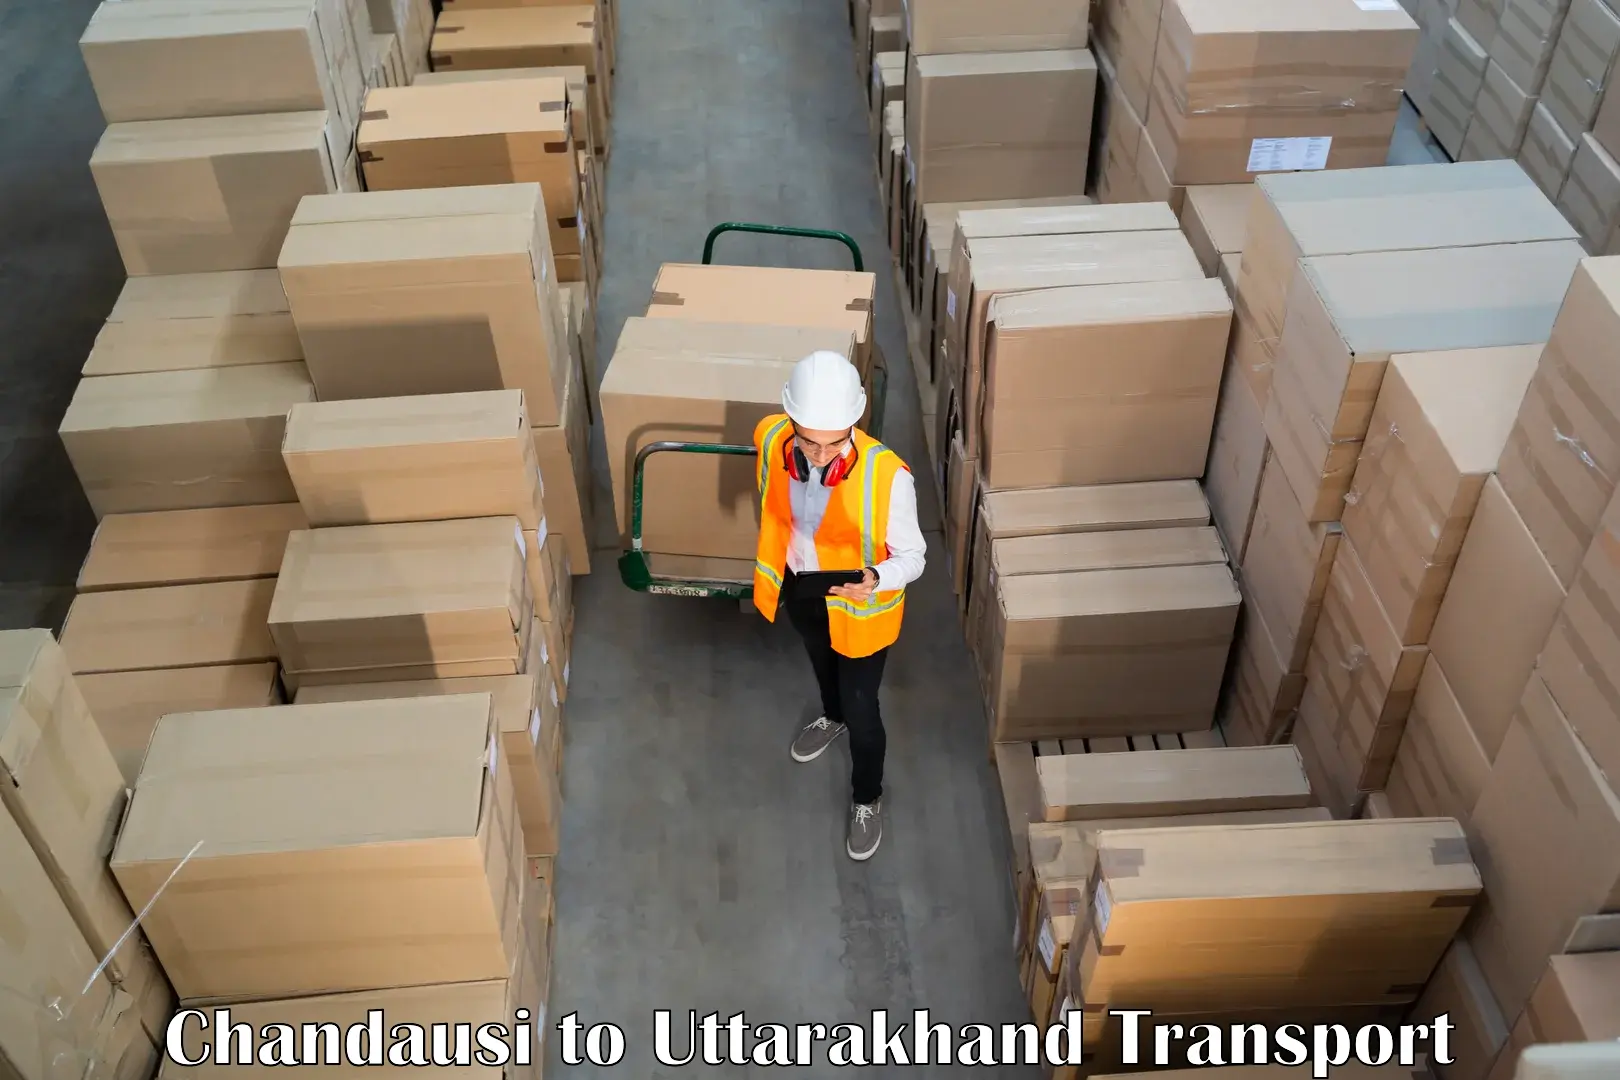 Truck transport companies in India Chandausi to Haridwar